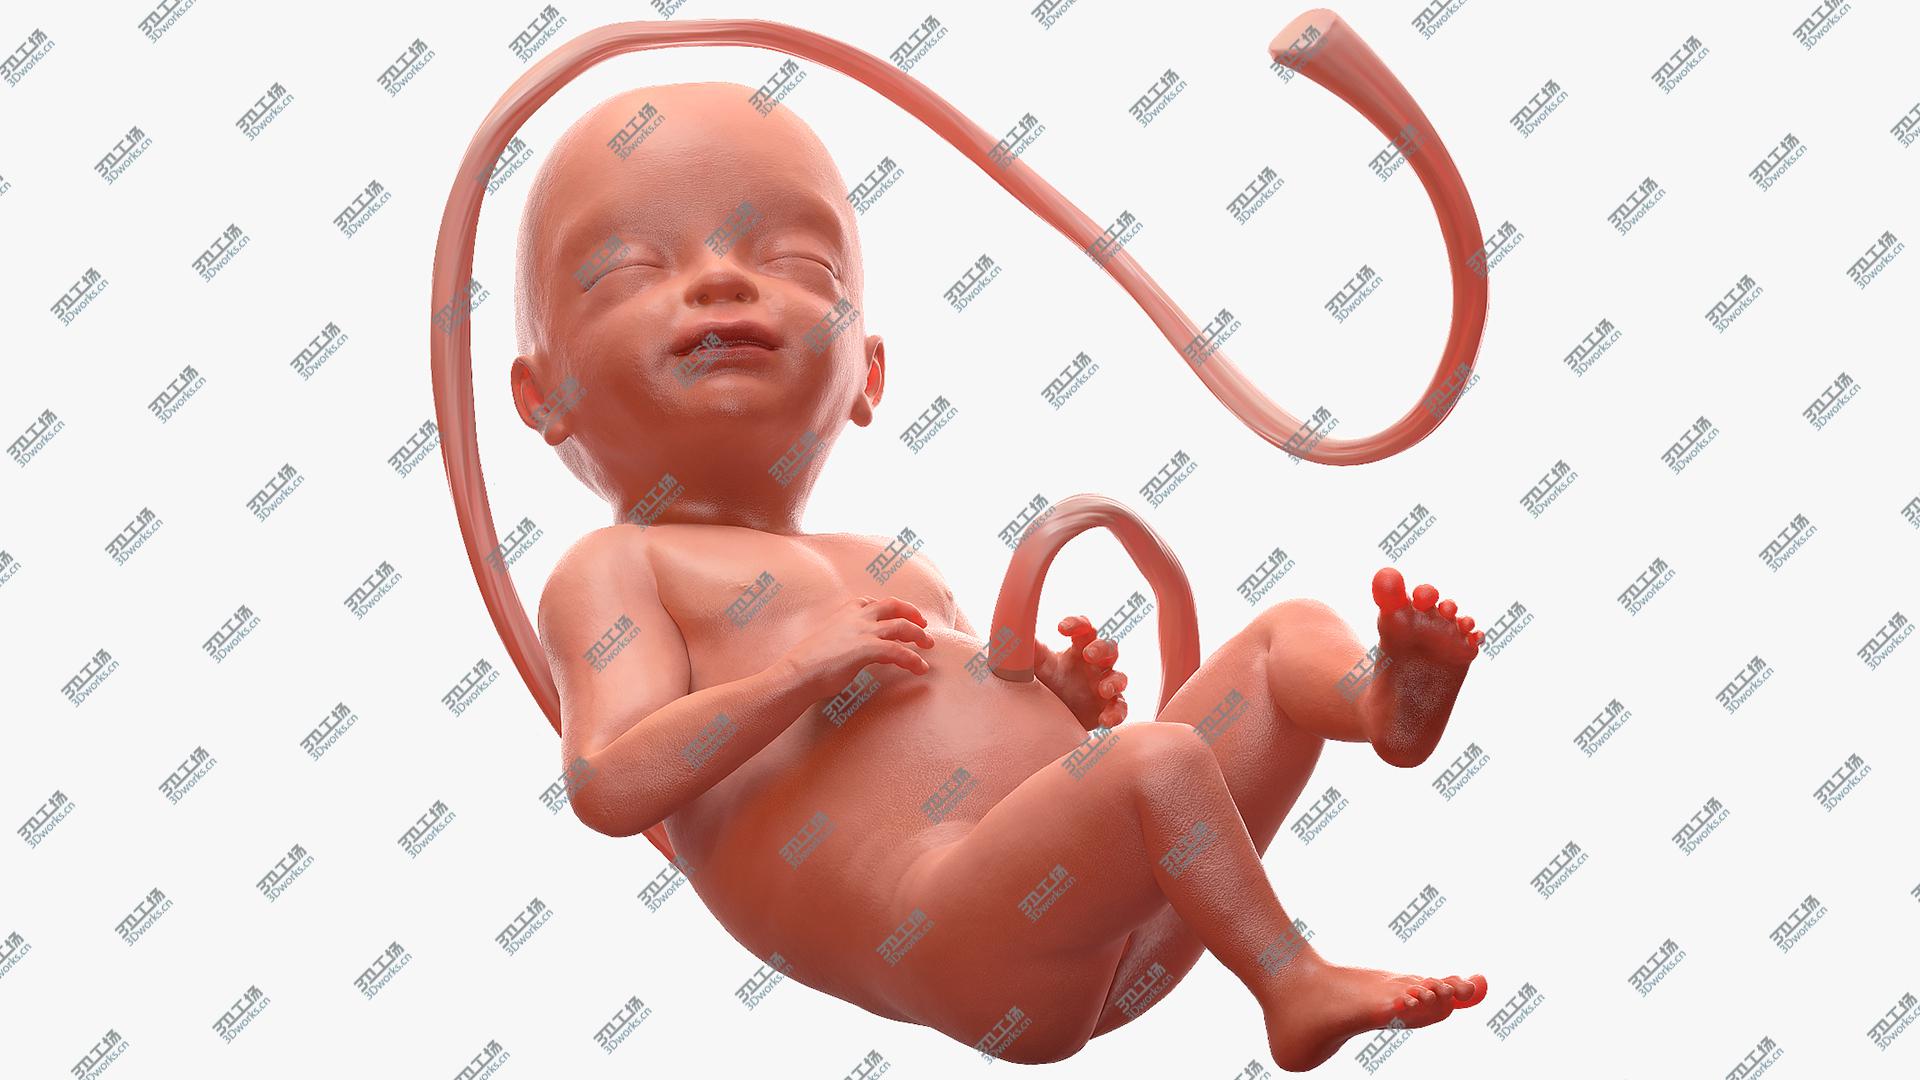 images/goods_img/20210313/3D Human Fetus at 24 Weeks Rigged model/1.jpg